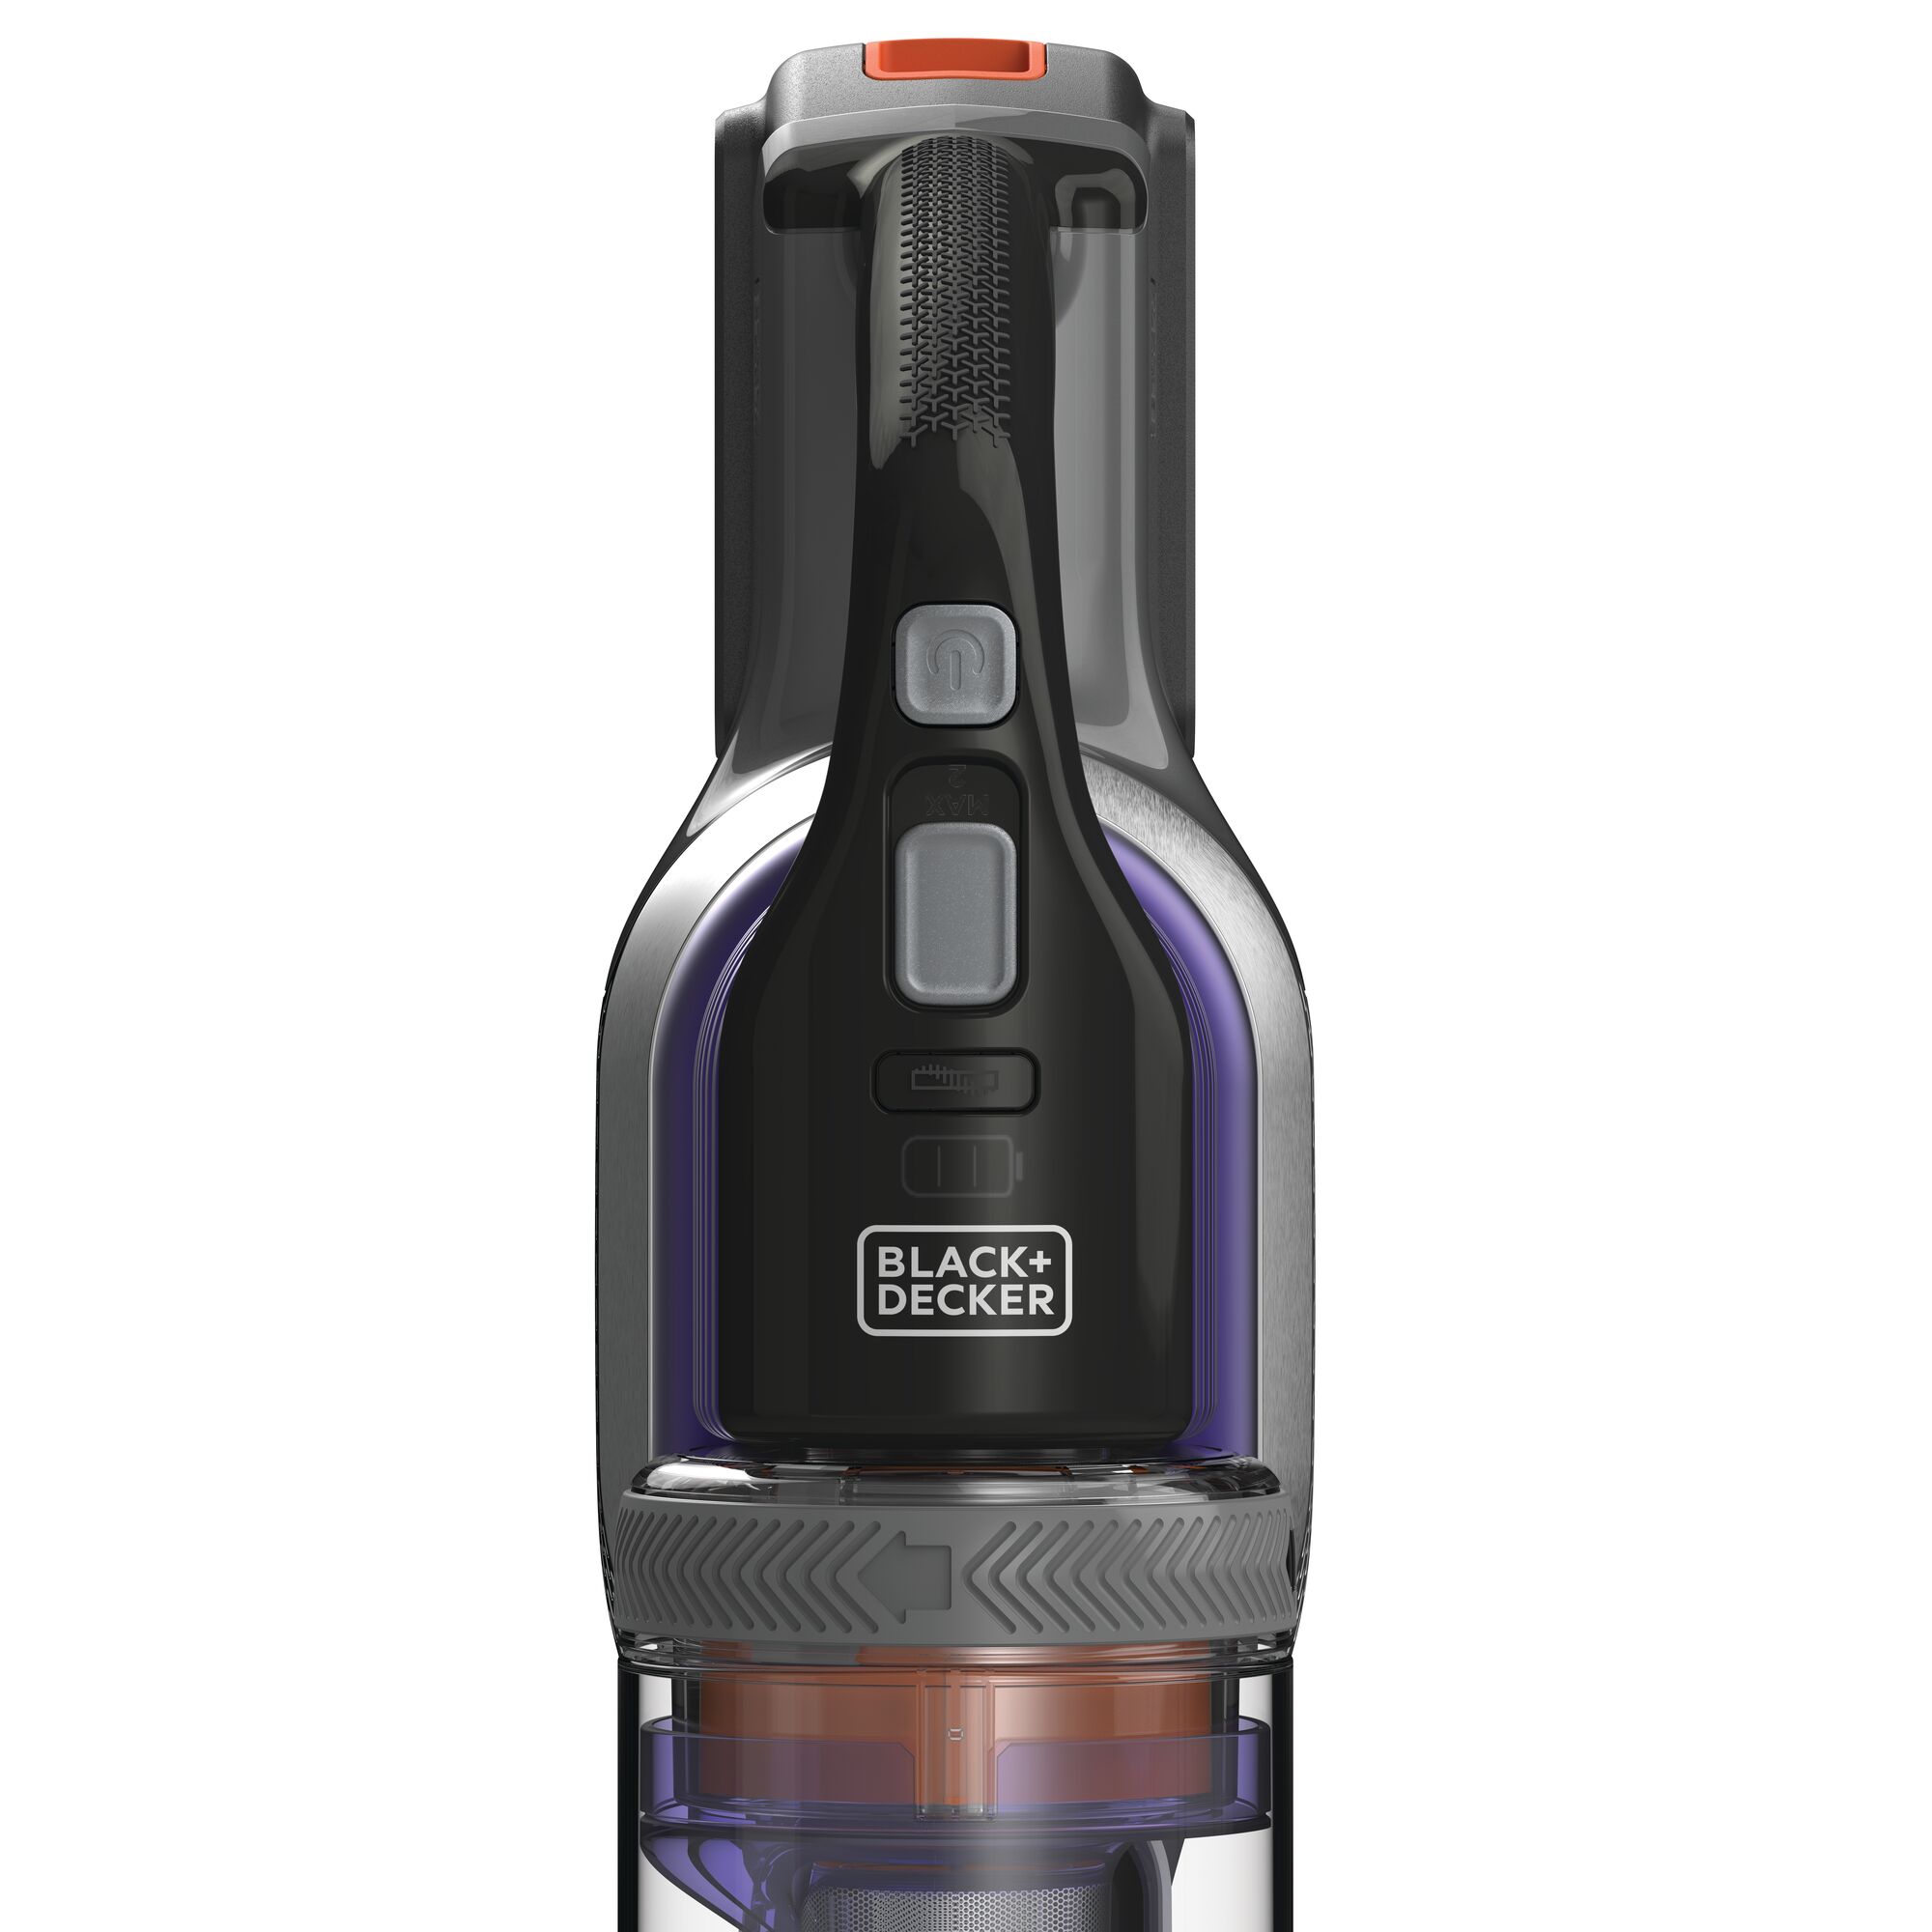 BLACK+DECKER POWERSERIES Extreme MAX™ 20V MAX* Cordless Stick Vacuum  (BHFEB520D1)